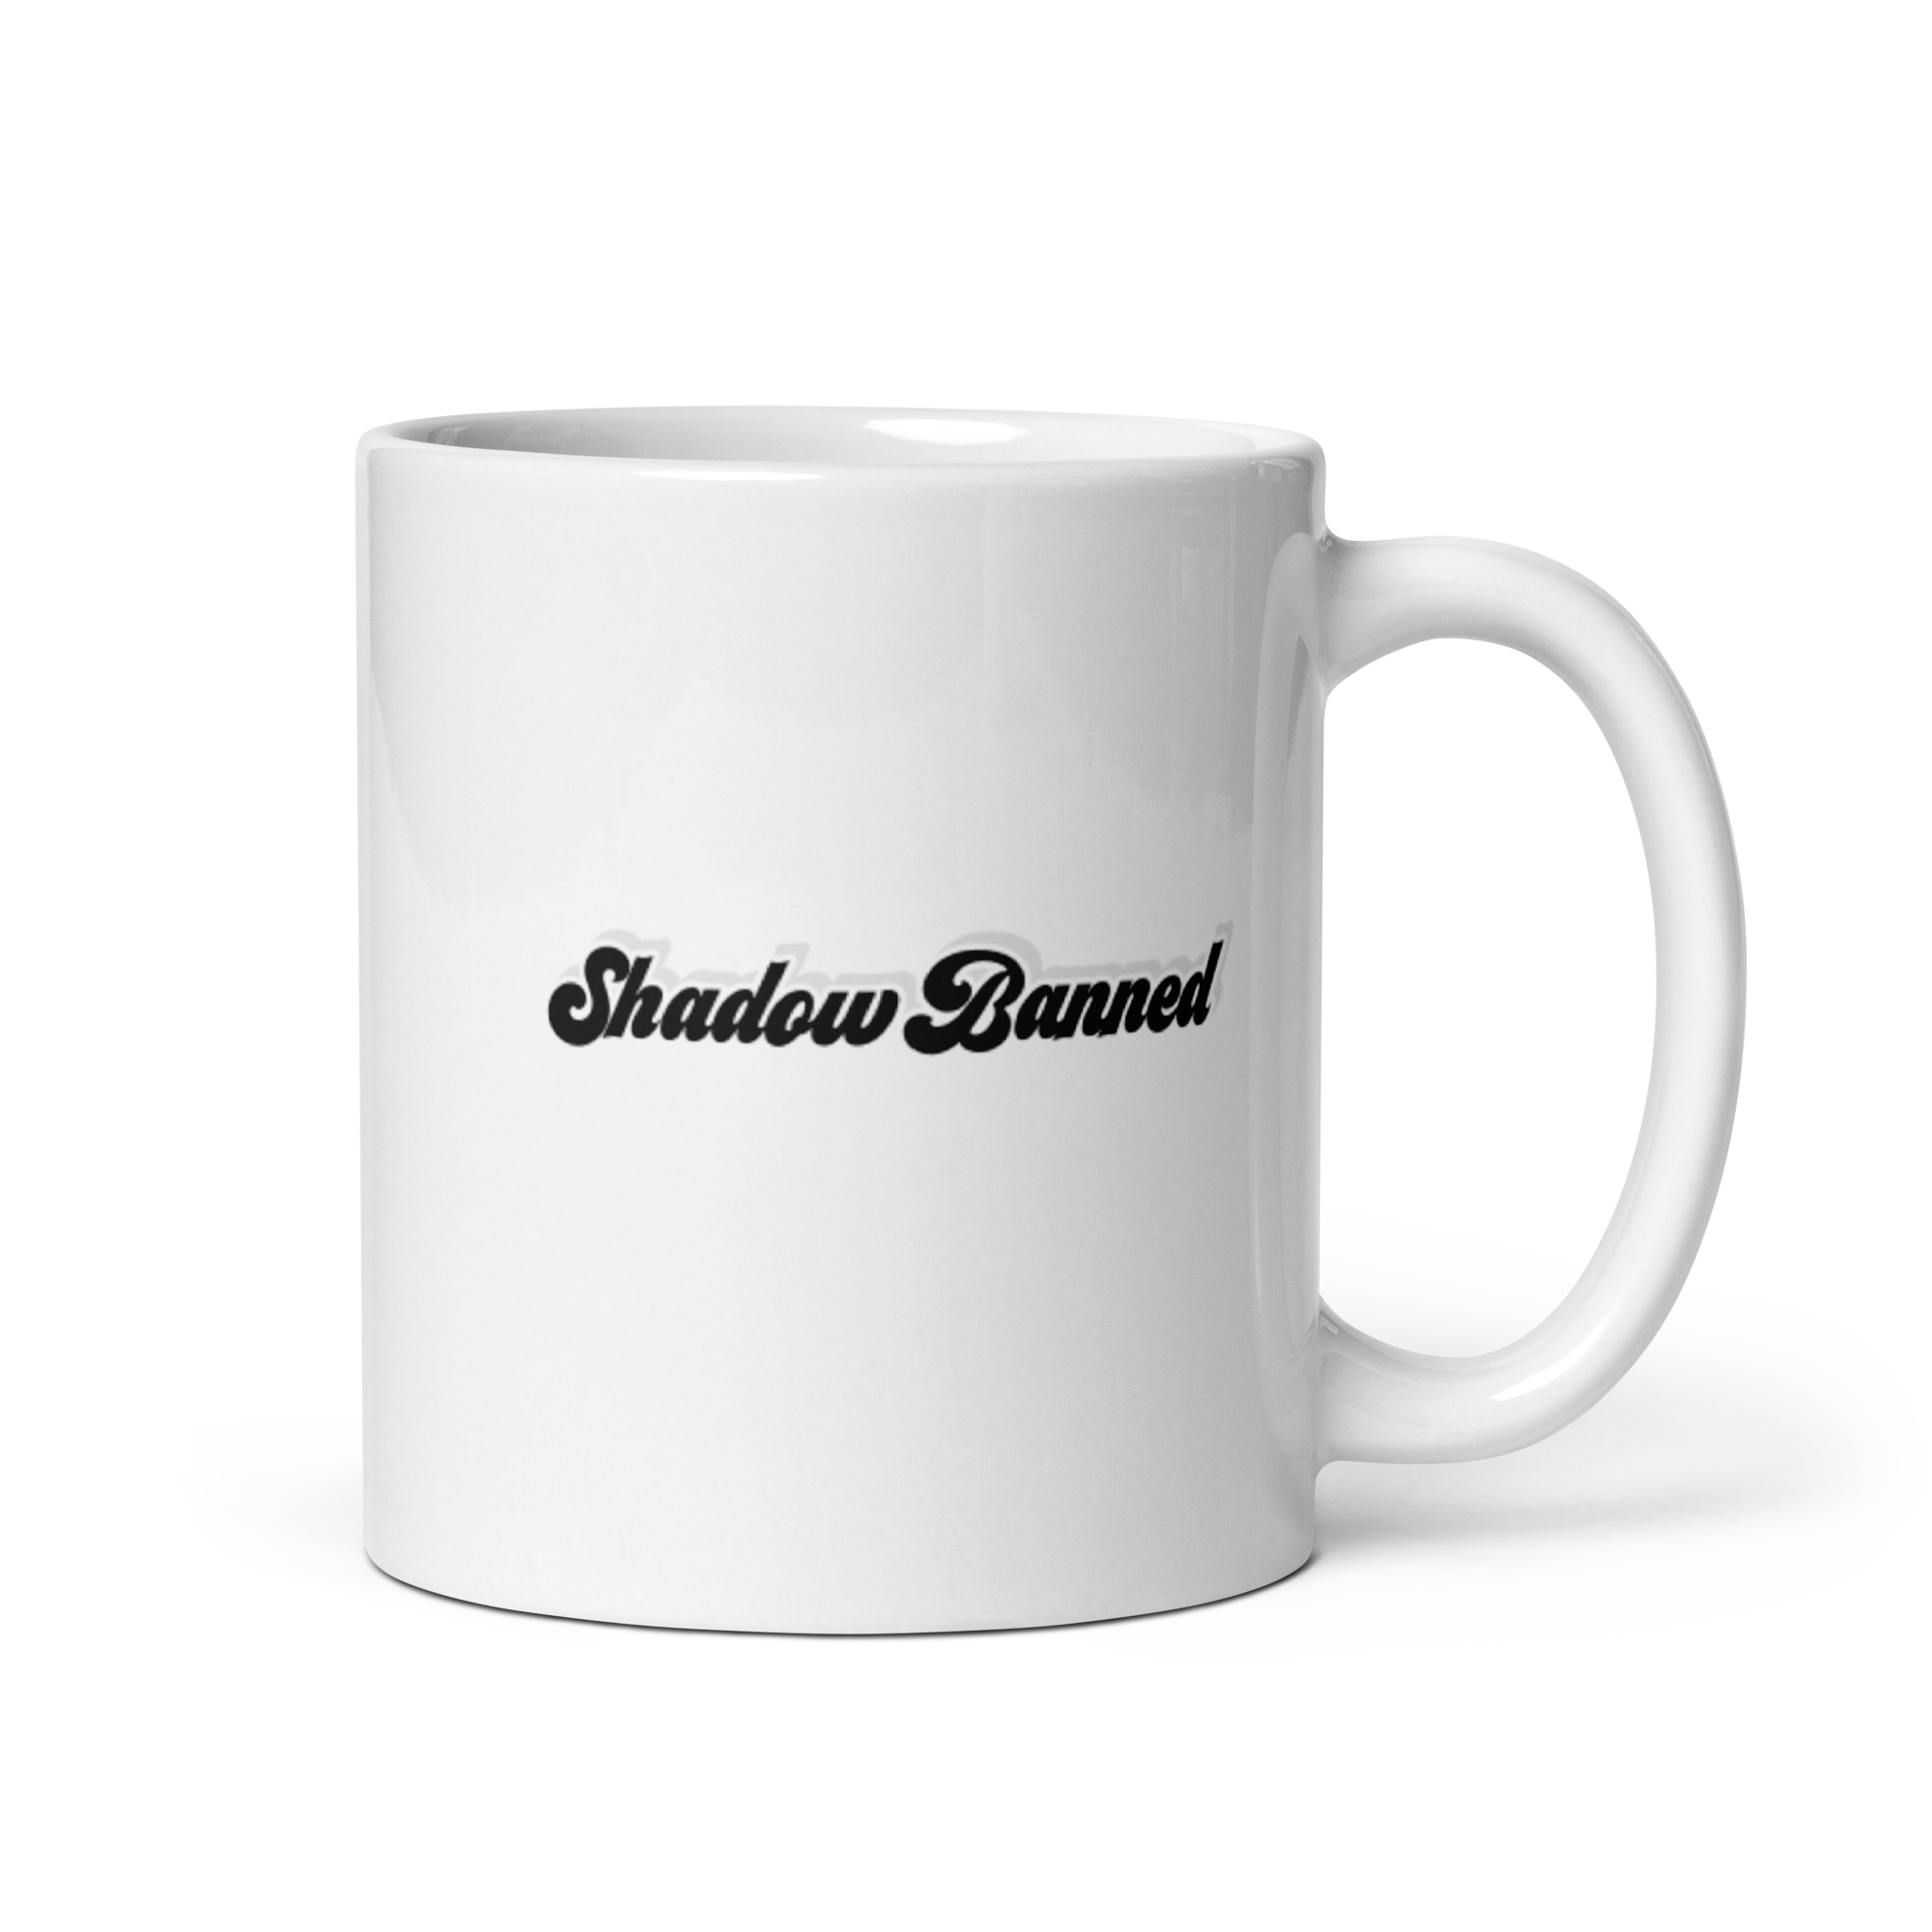 Shadow Banned Club Mug